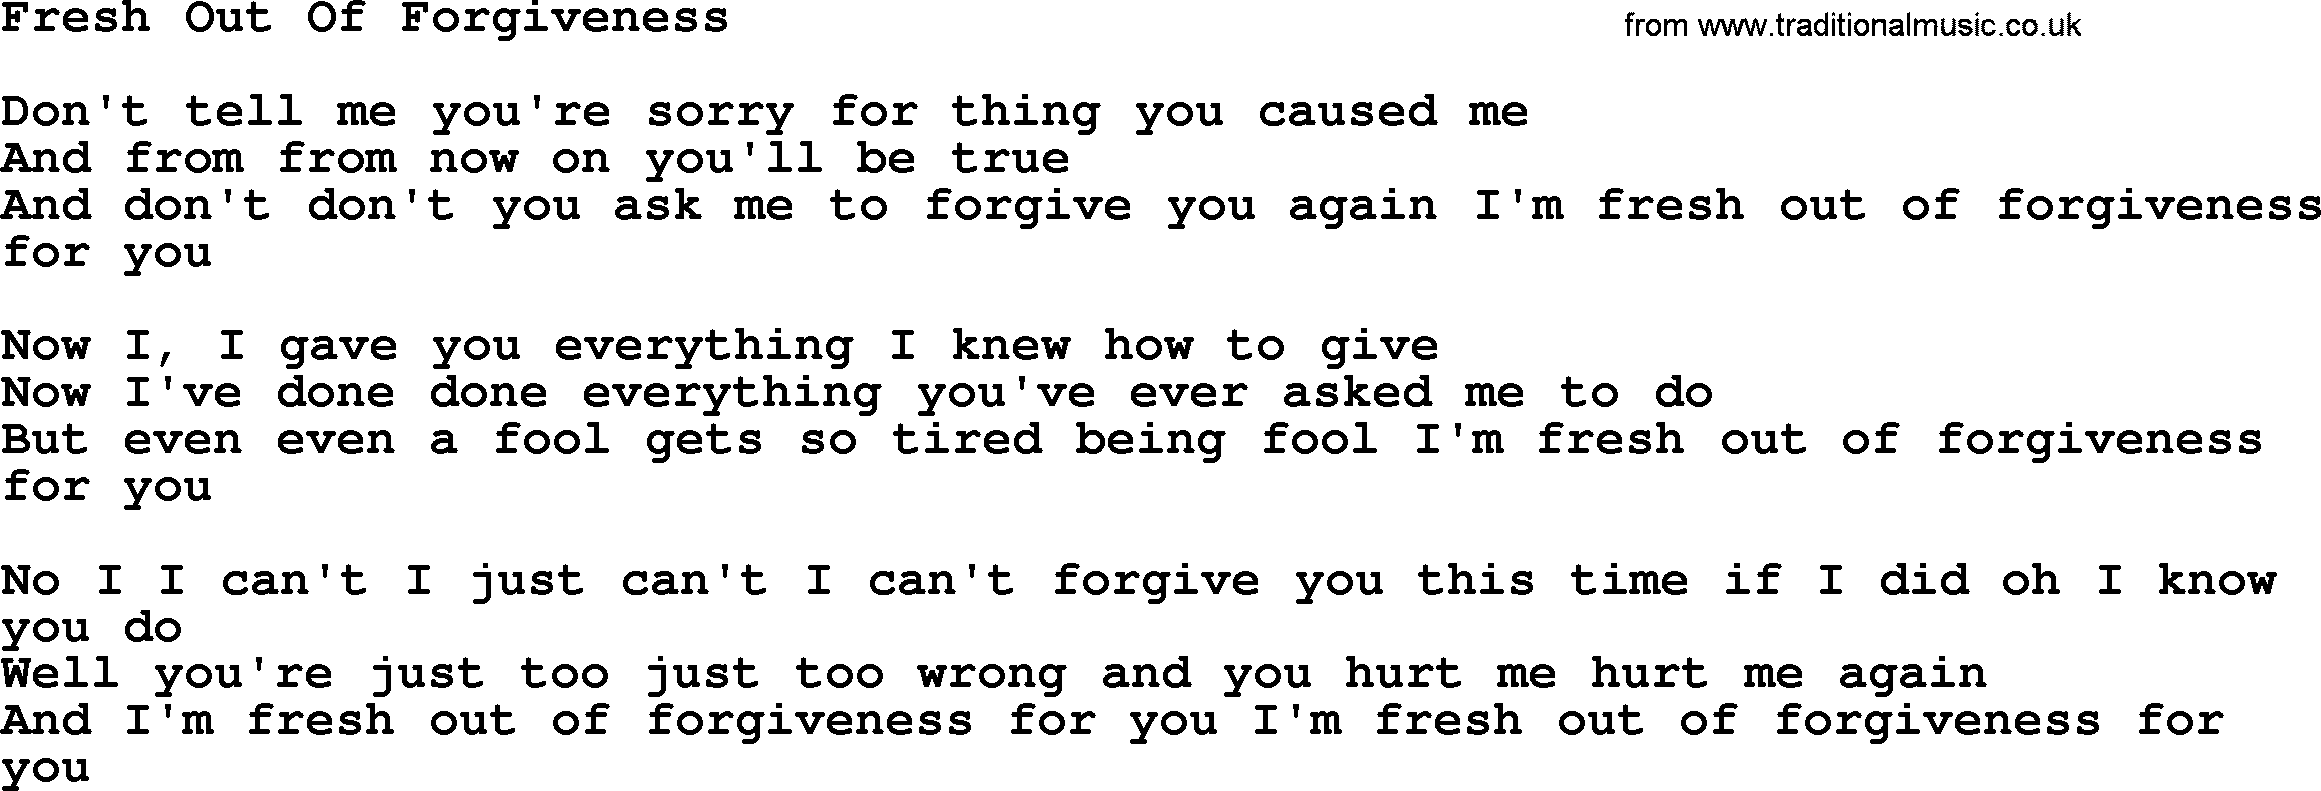 Dolly Parton song Fresh Out Of Forgiveness.txt lyrics